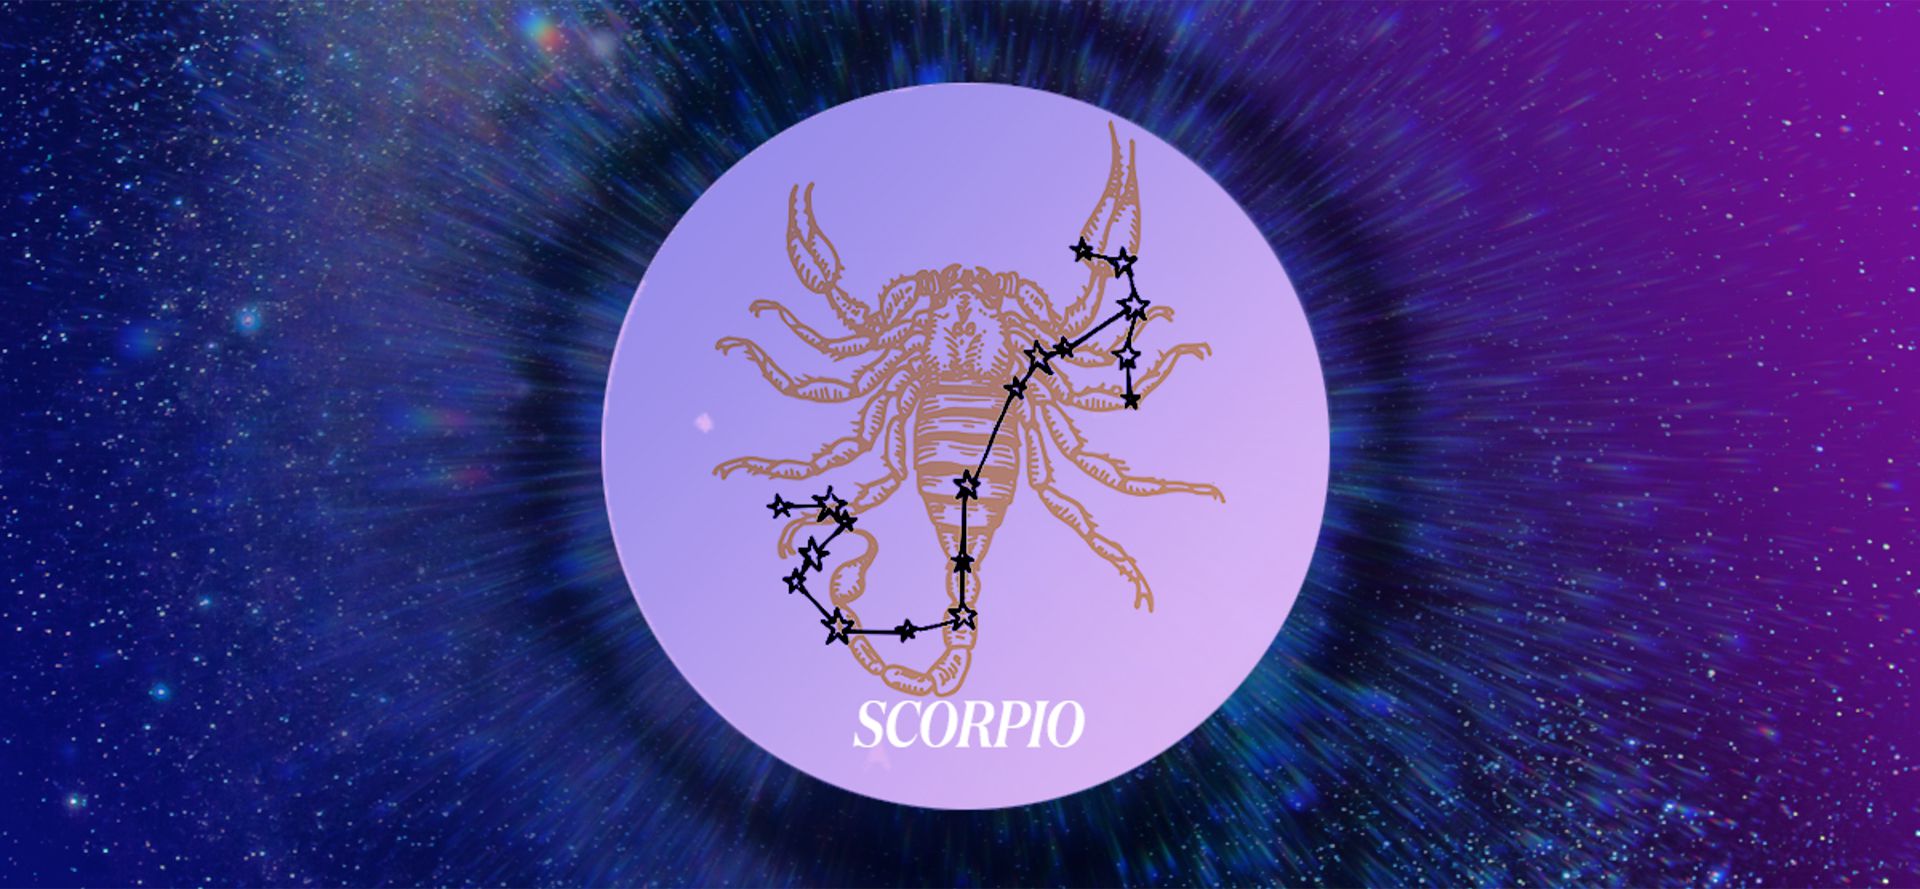 October Scorpio VS November Scorpio.